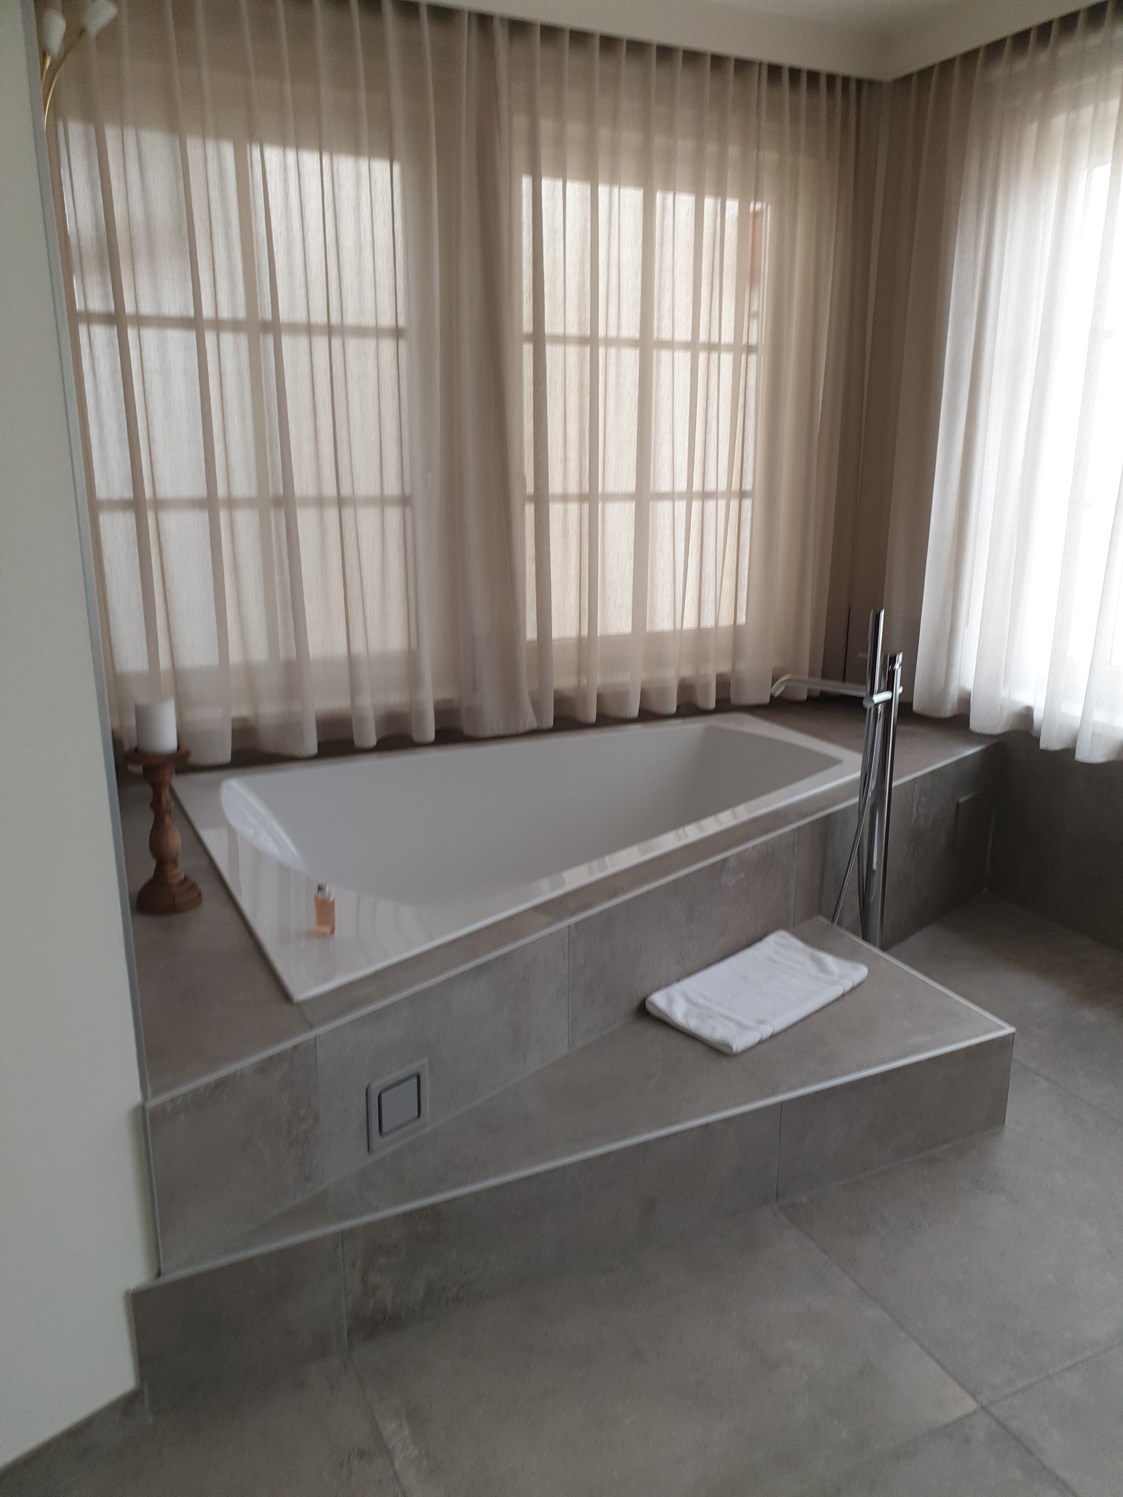 Luxushotel: Badewanne mit Stufe - Romantikresort Bergergut